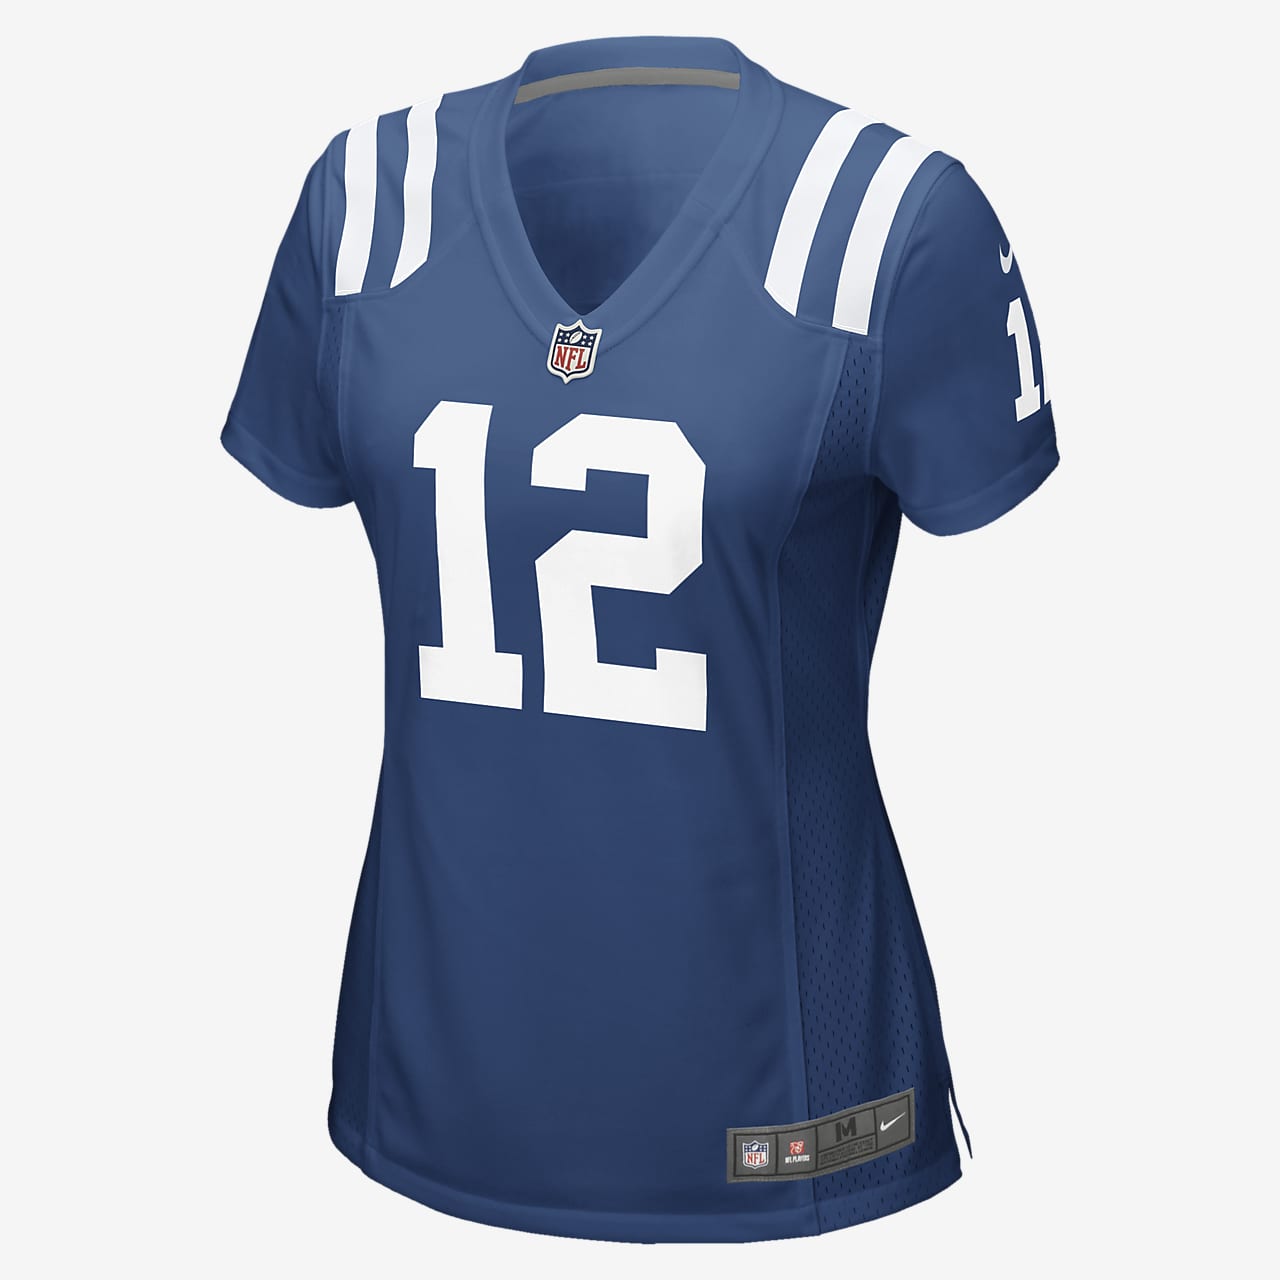 Camiseta oficial de fútbol americano para mujer NFL Indianapolis Colts (Andrew Luck)